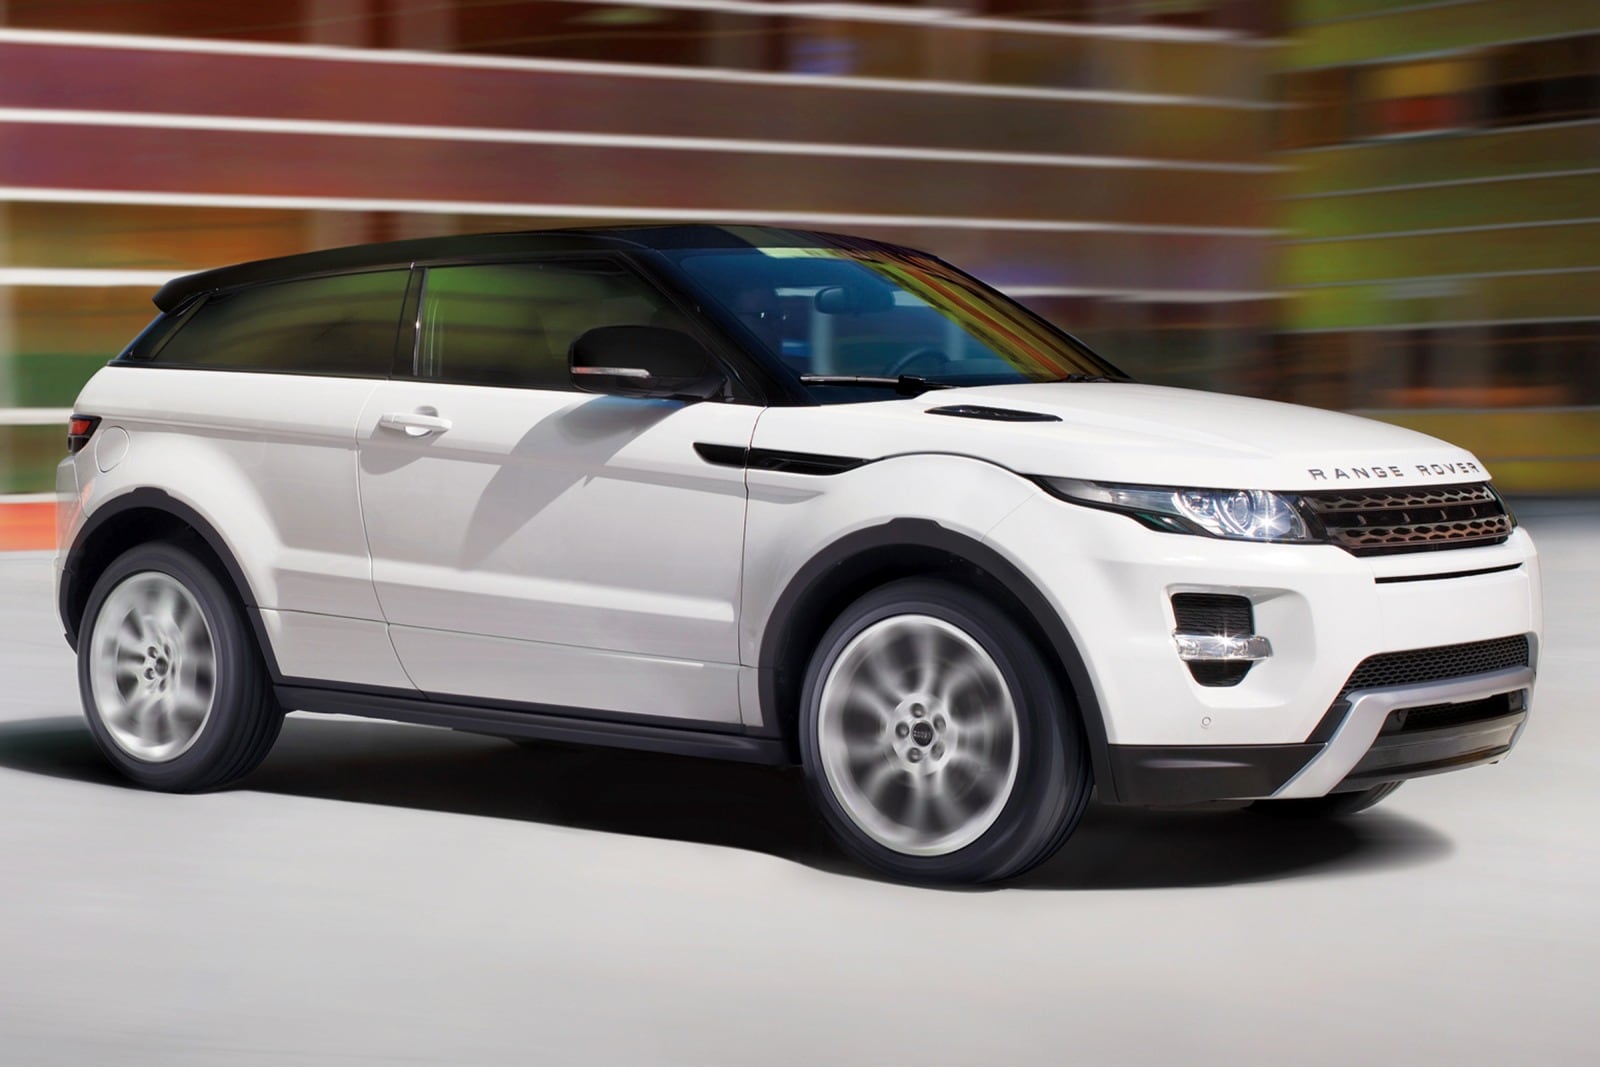 2013 Land Rover Range Rover Evoque Review & Ratings | Edmunds